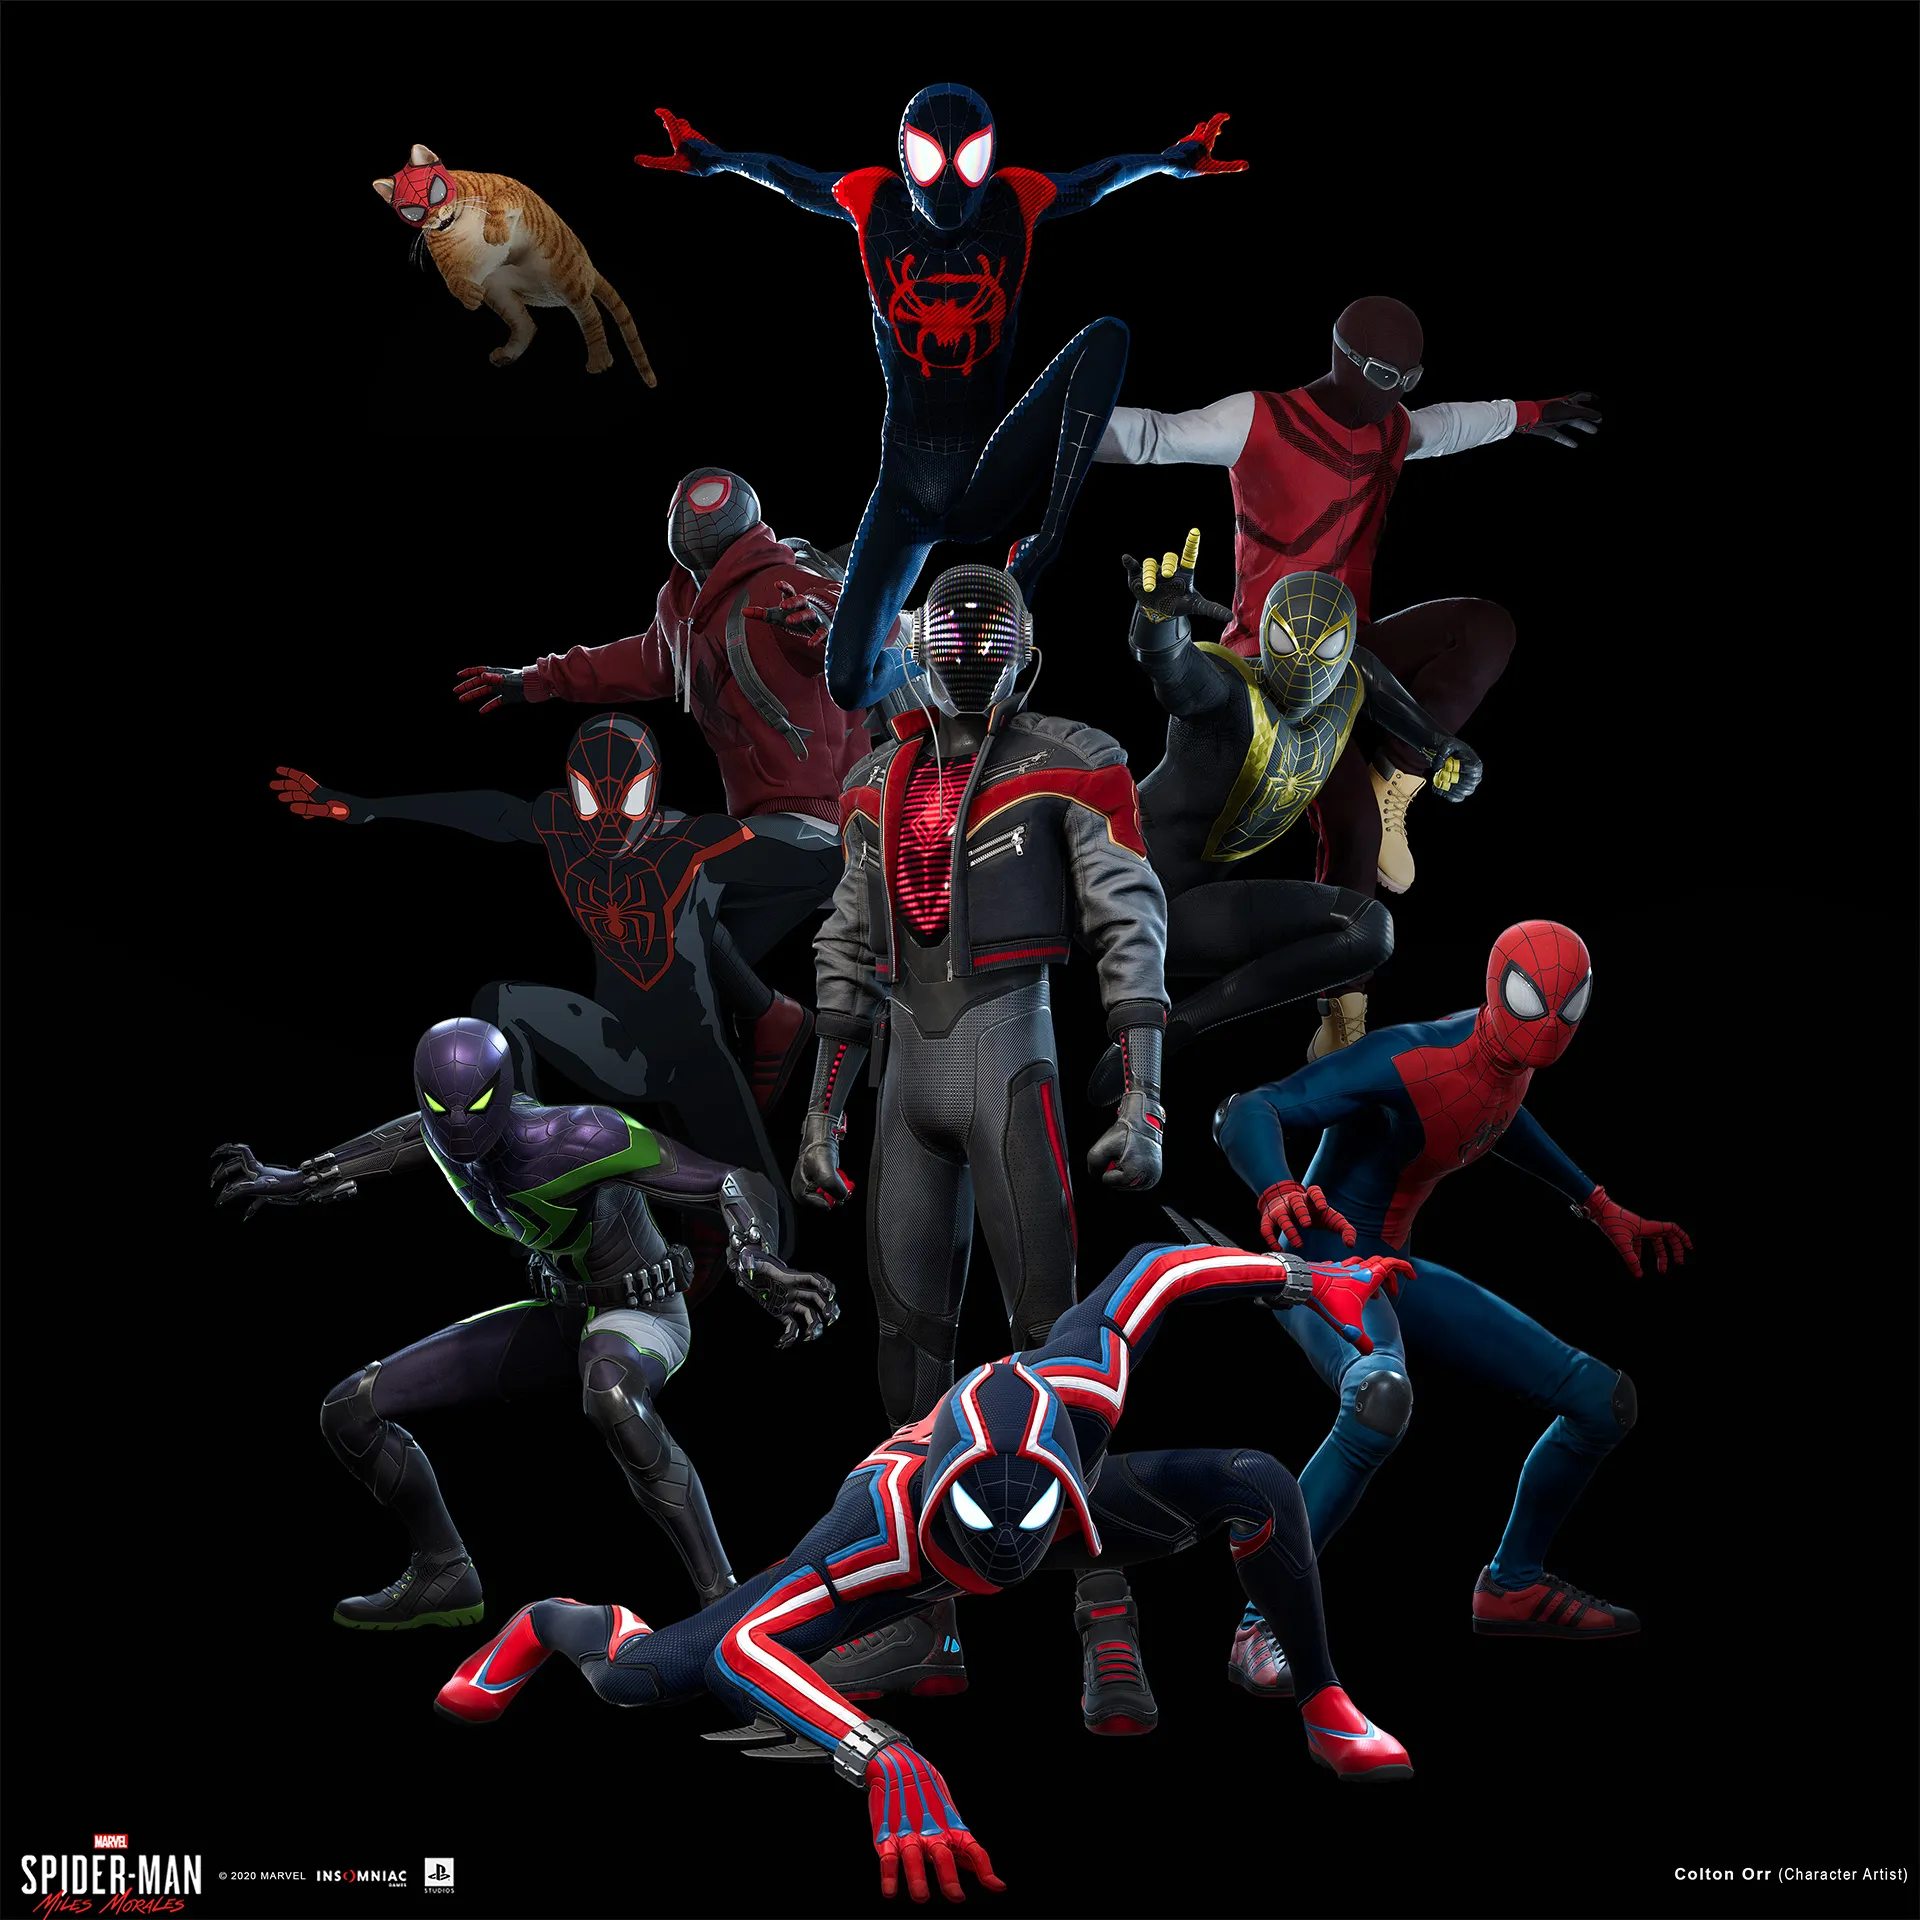 Insomniac Games Marvel's Spider-Man 2 Art Blast - ArtStation Magazine